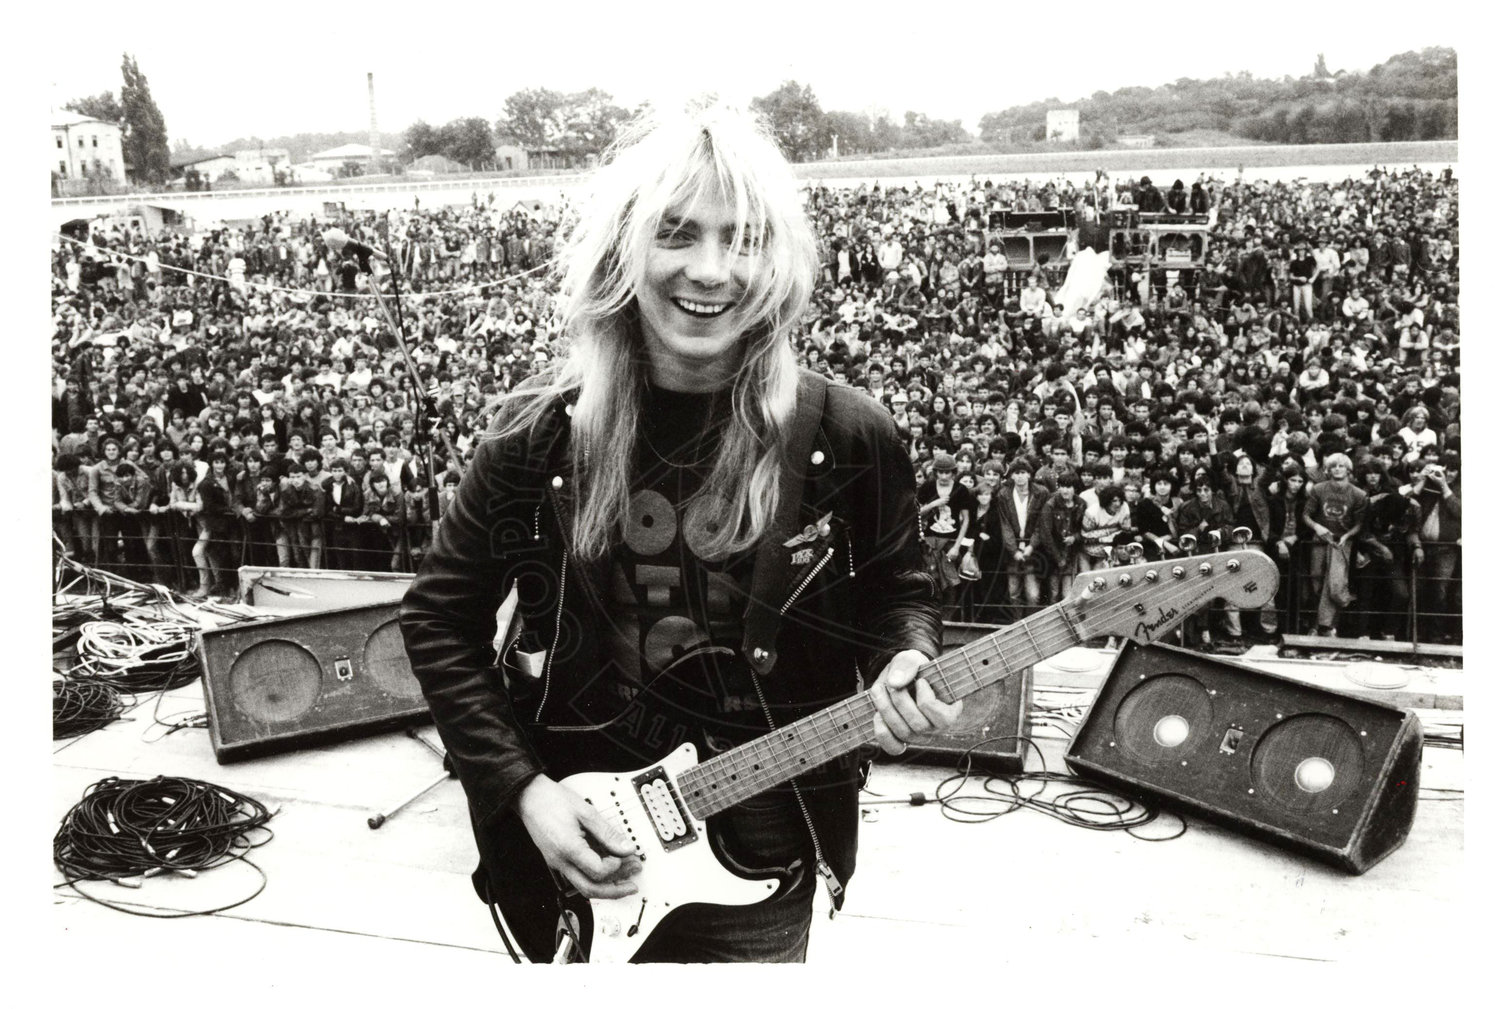 Happy 63rd birthday Dave Murray(Iron Maiden) 